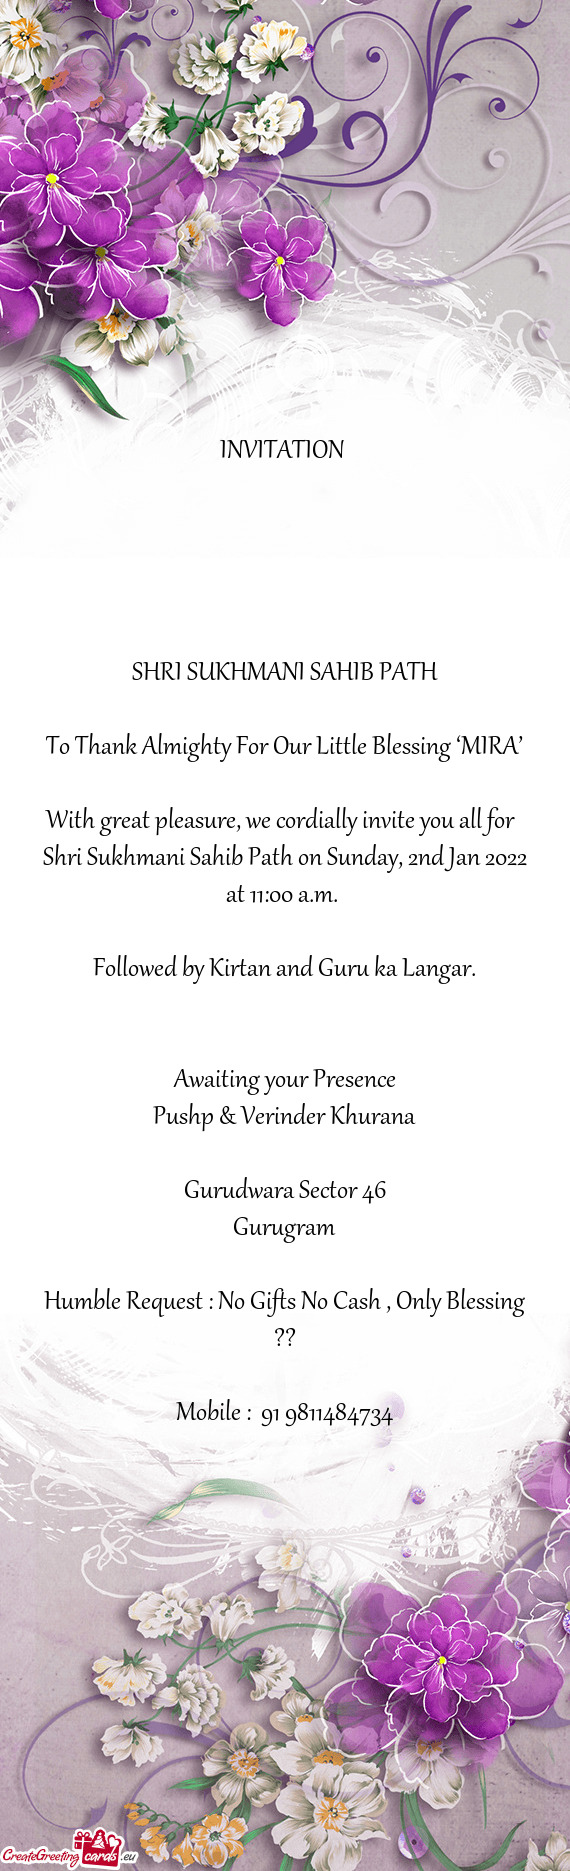 Shri Sukhmani Sahib Path on Sunday, 2nd Jan 2022 at 11:00 a.m